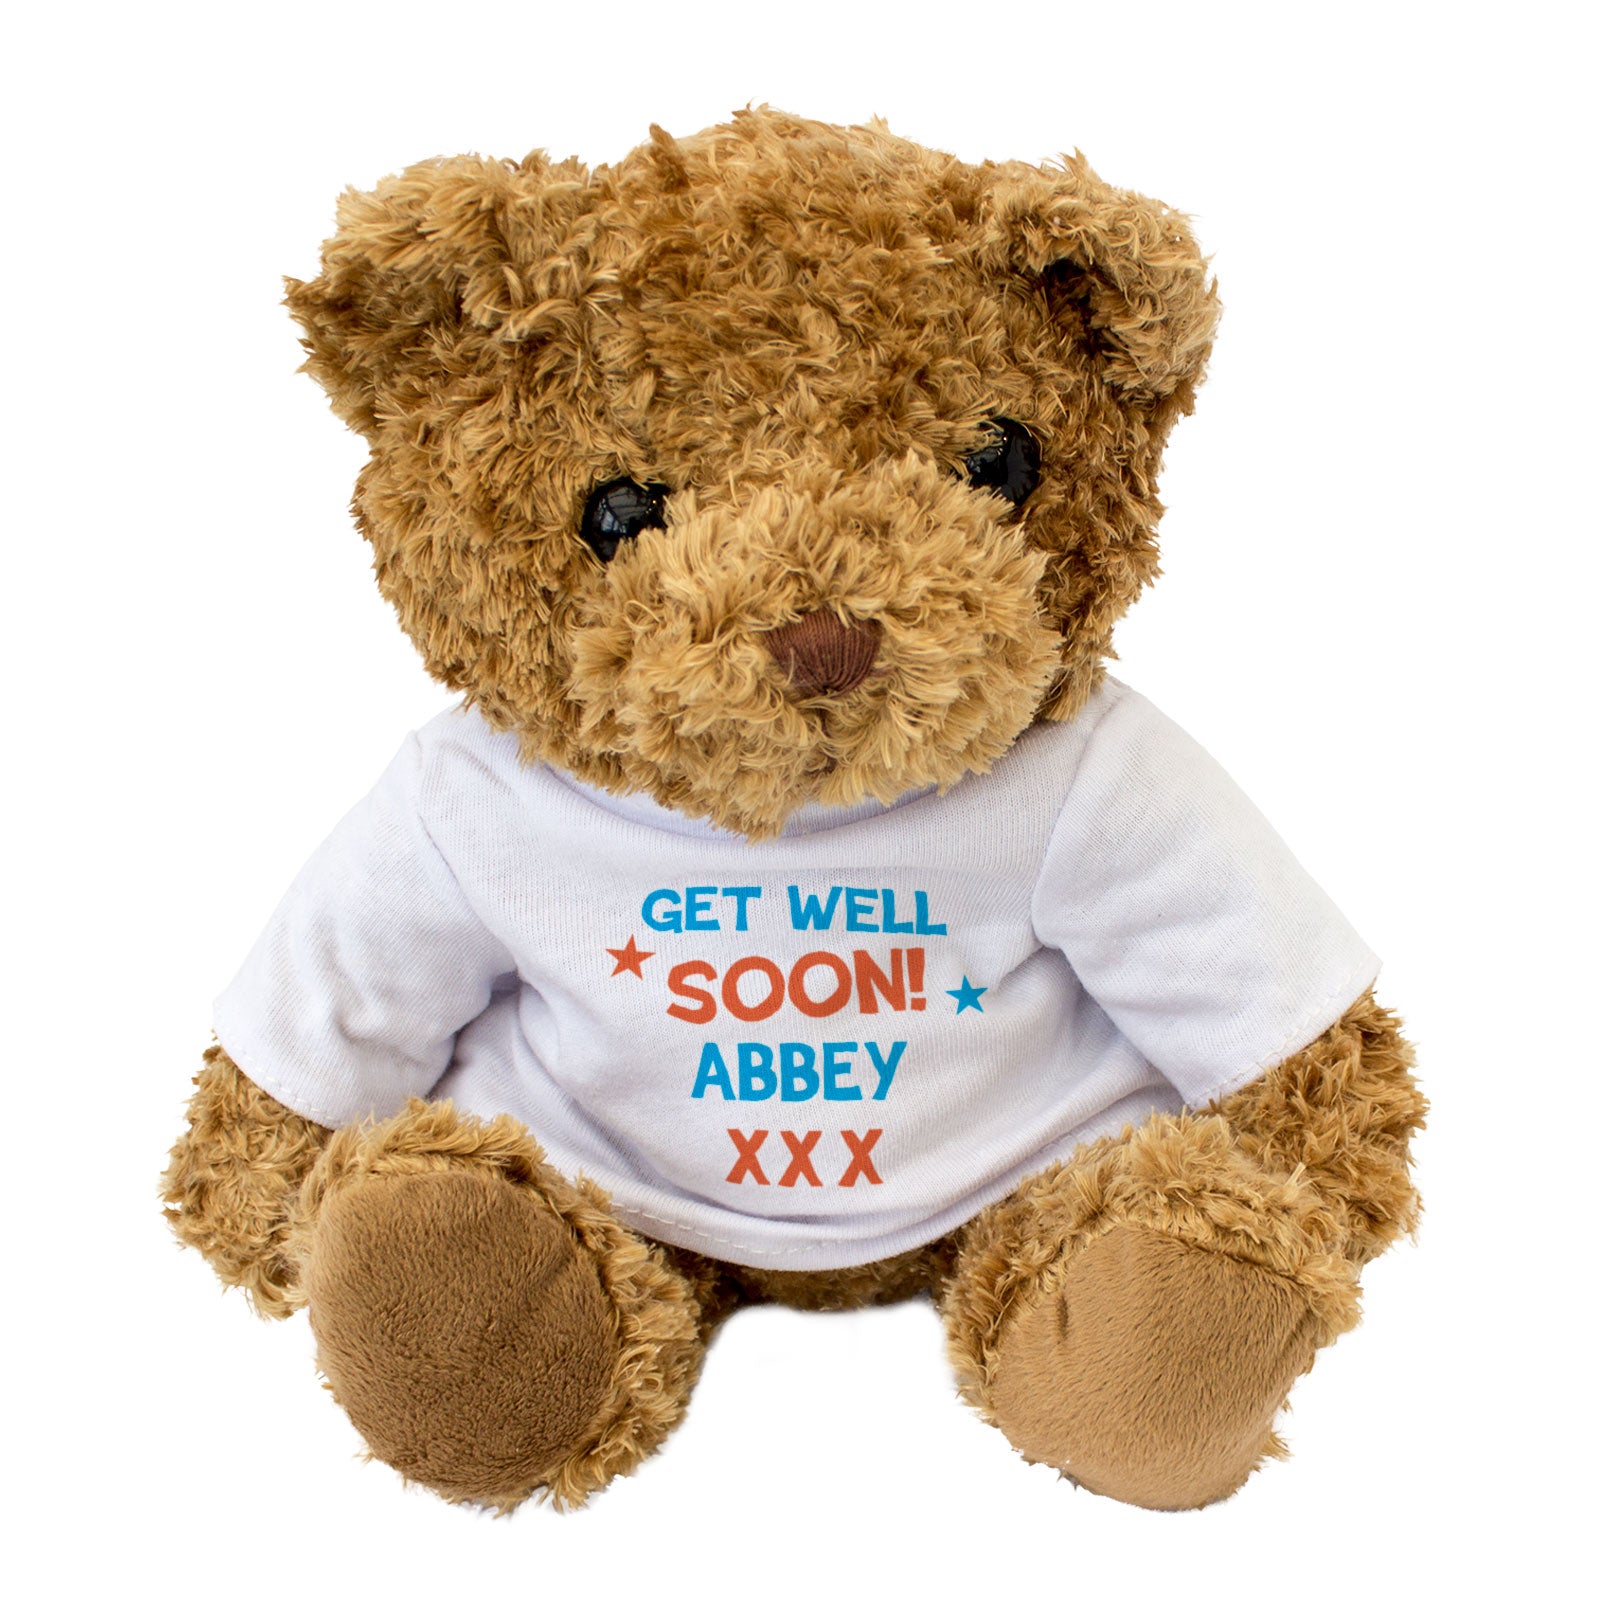 Get Well Soon Abbey - Teddy Bear